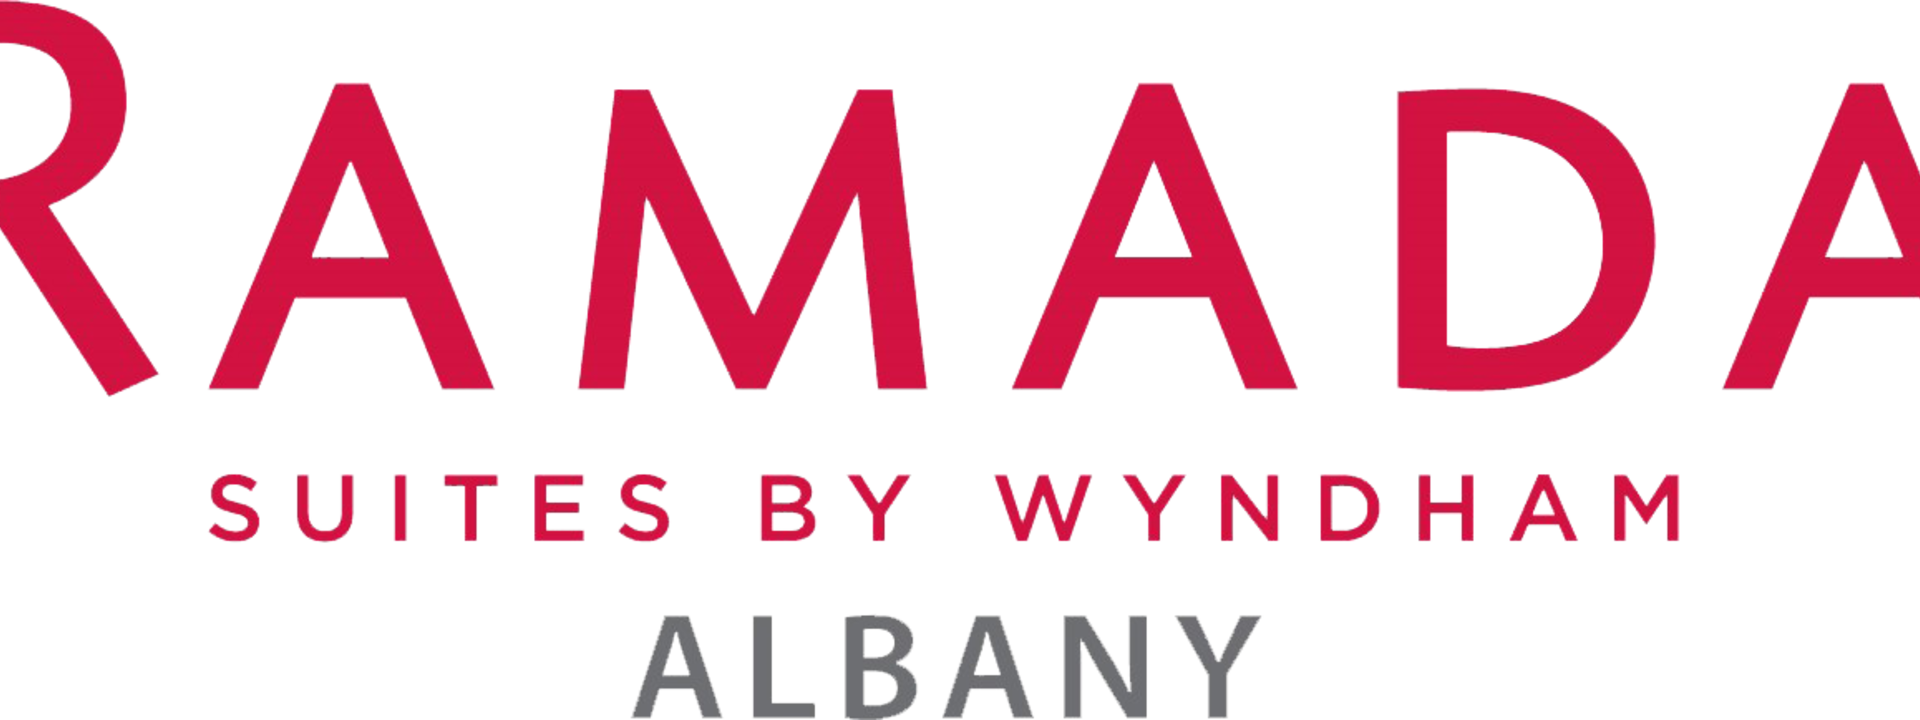 Ramada Albany new logo.png